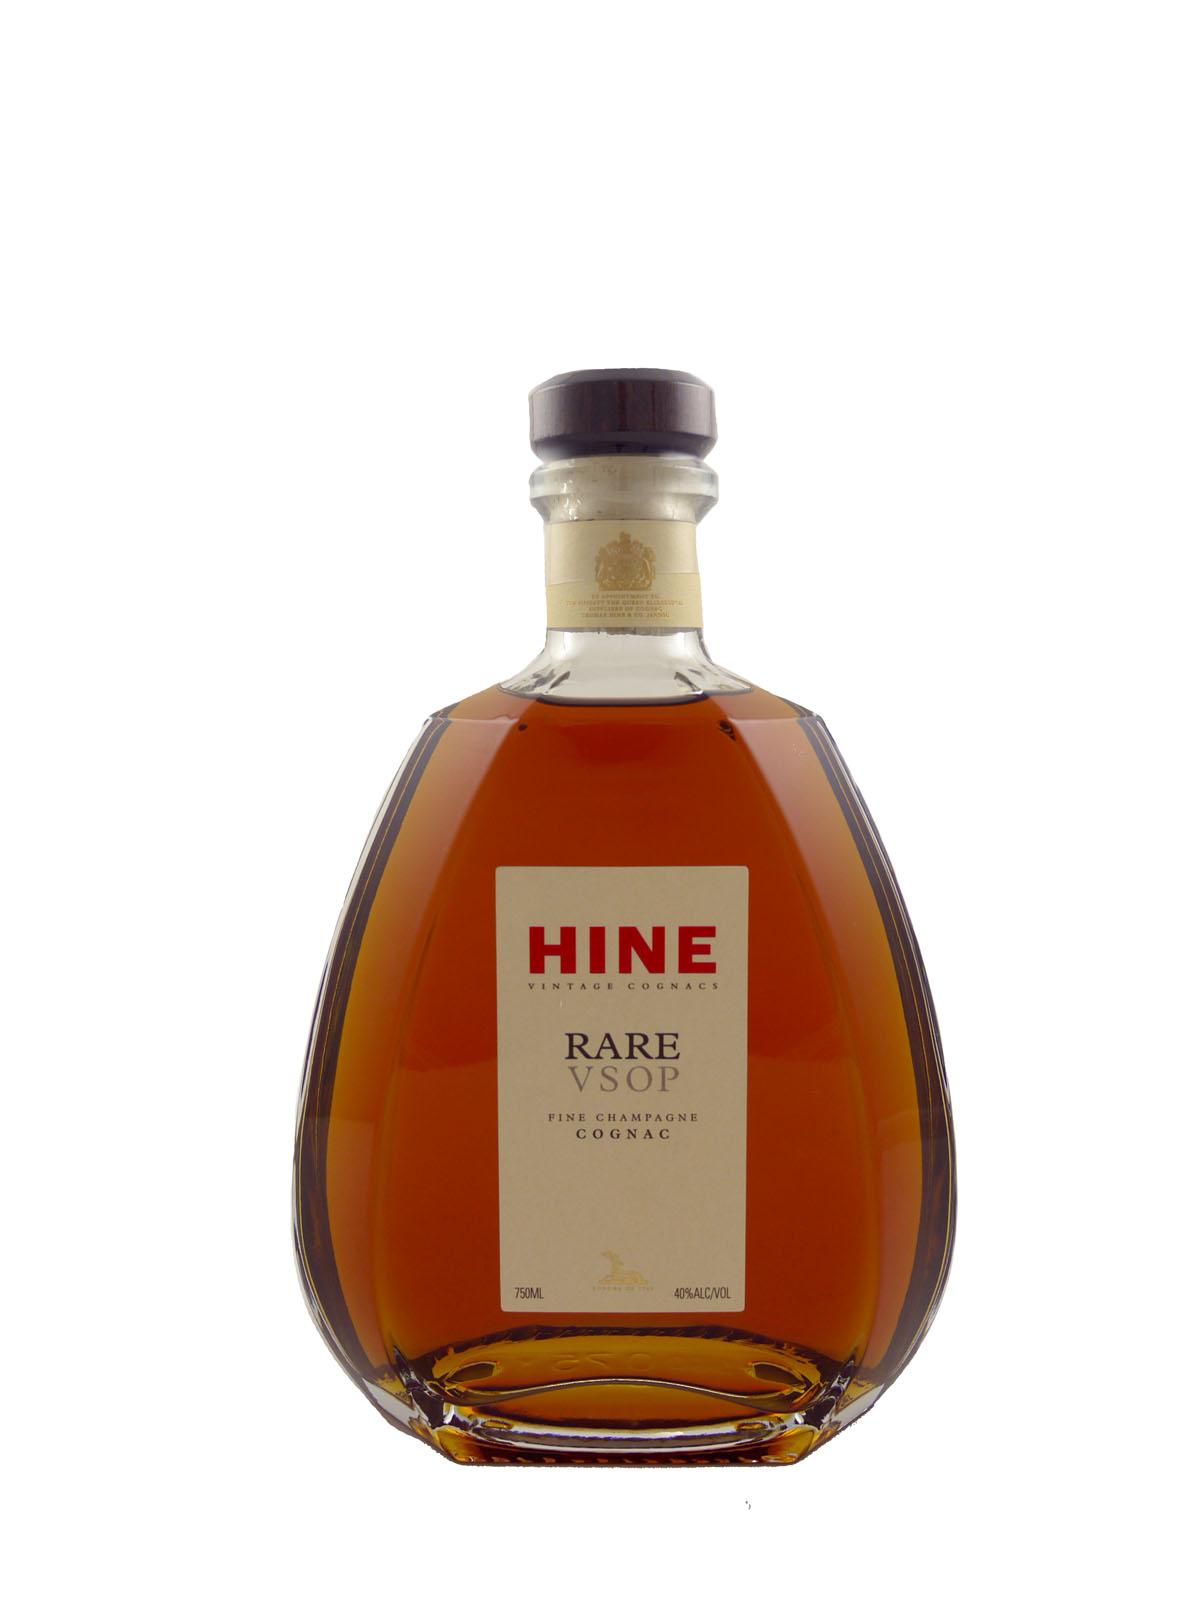 Hine Rare VSOP Cognac | Astor Wines & Spirits